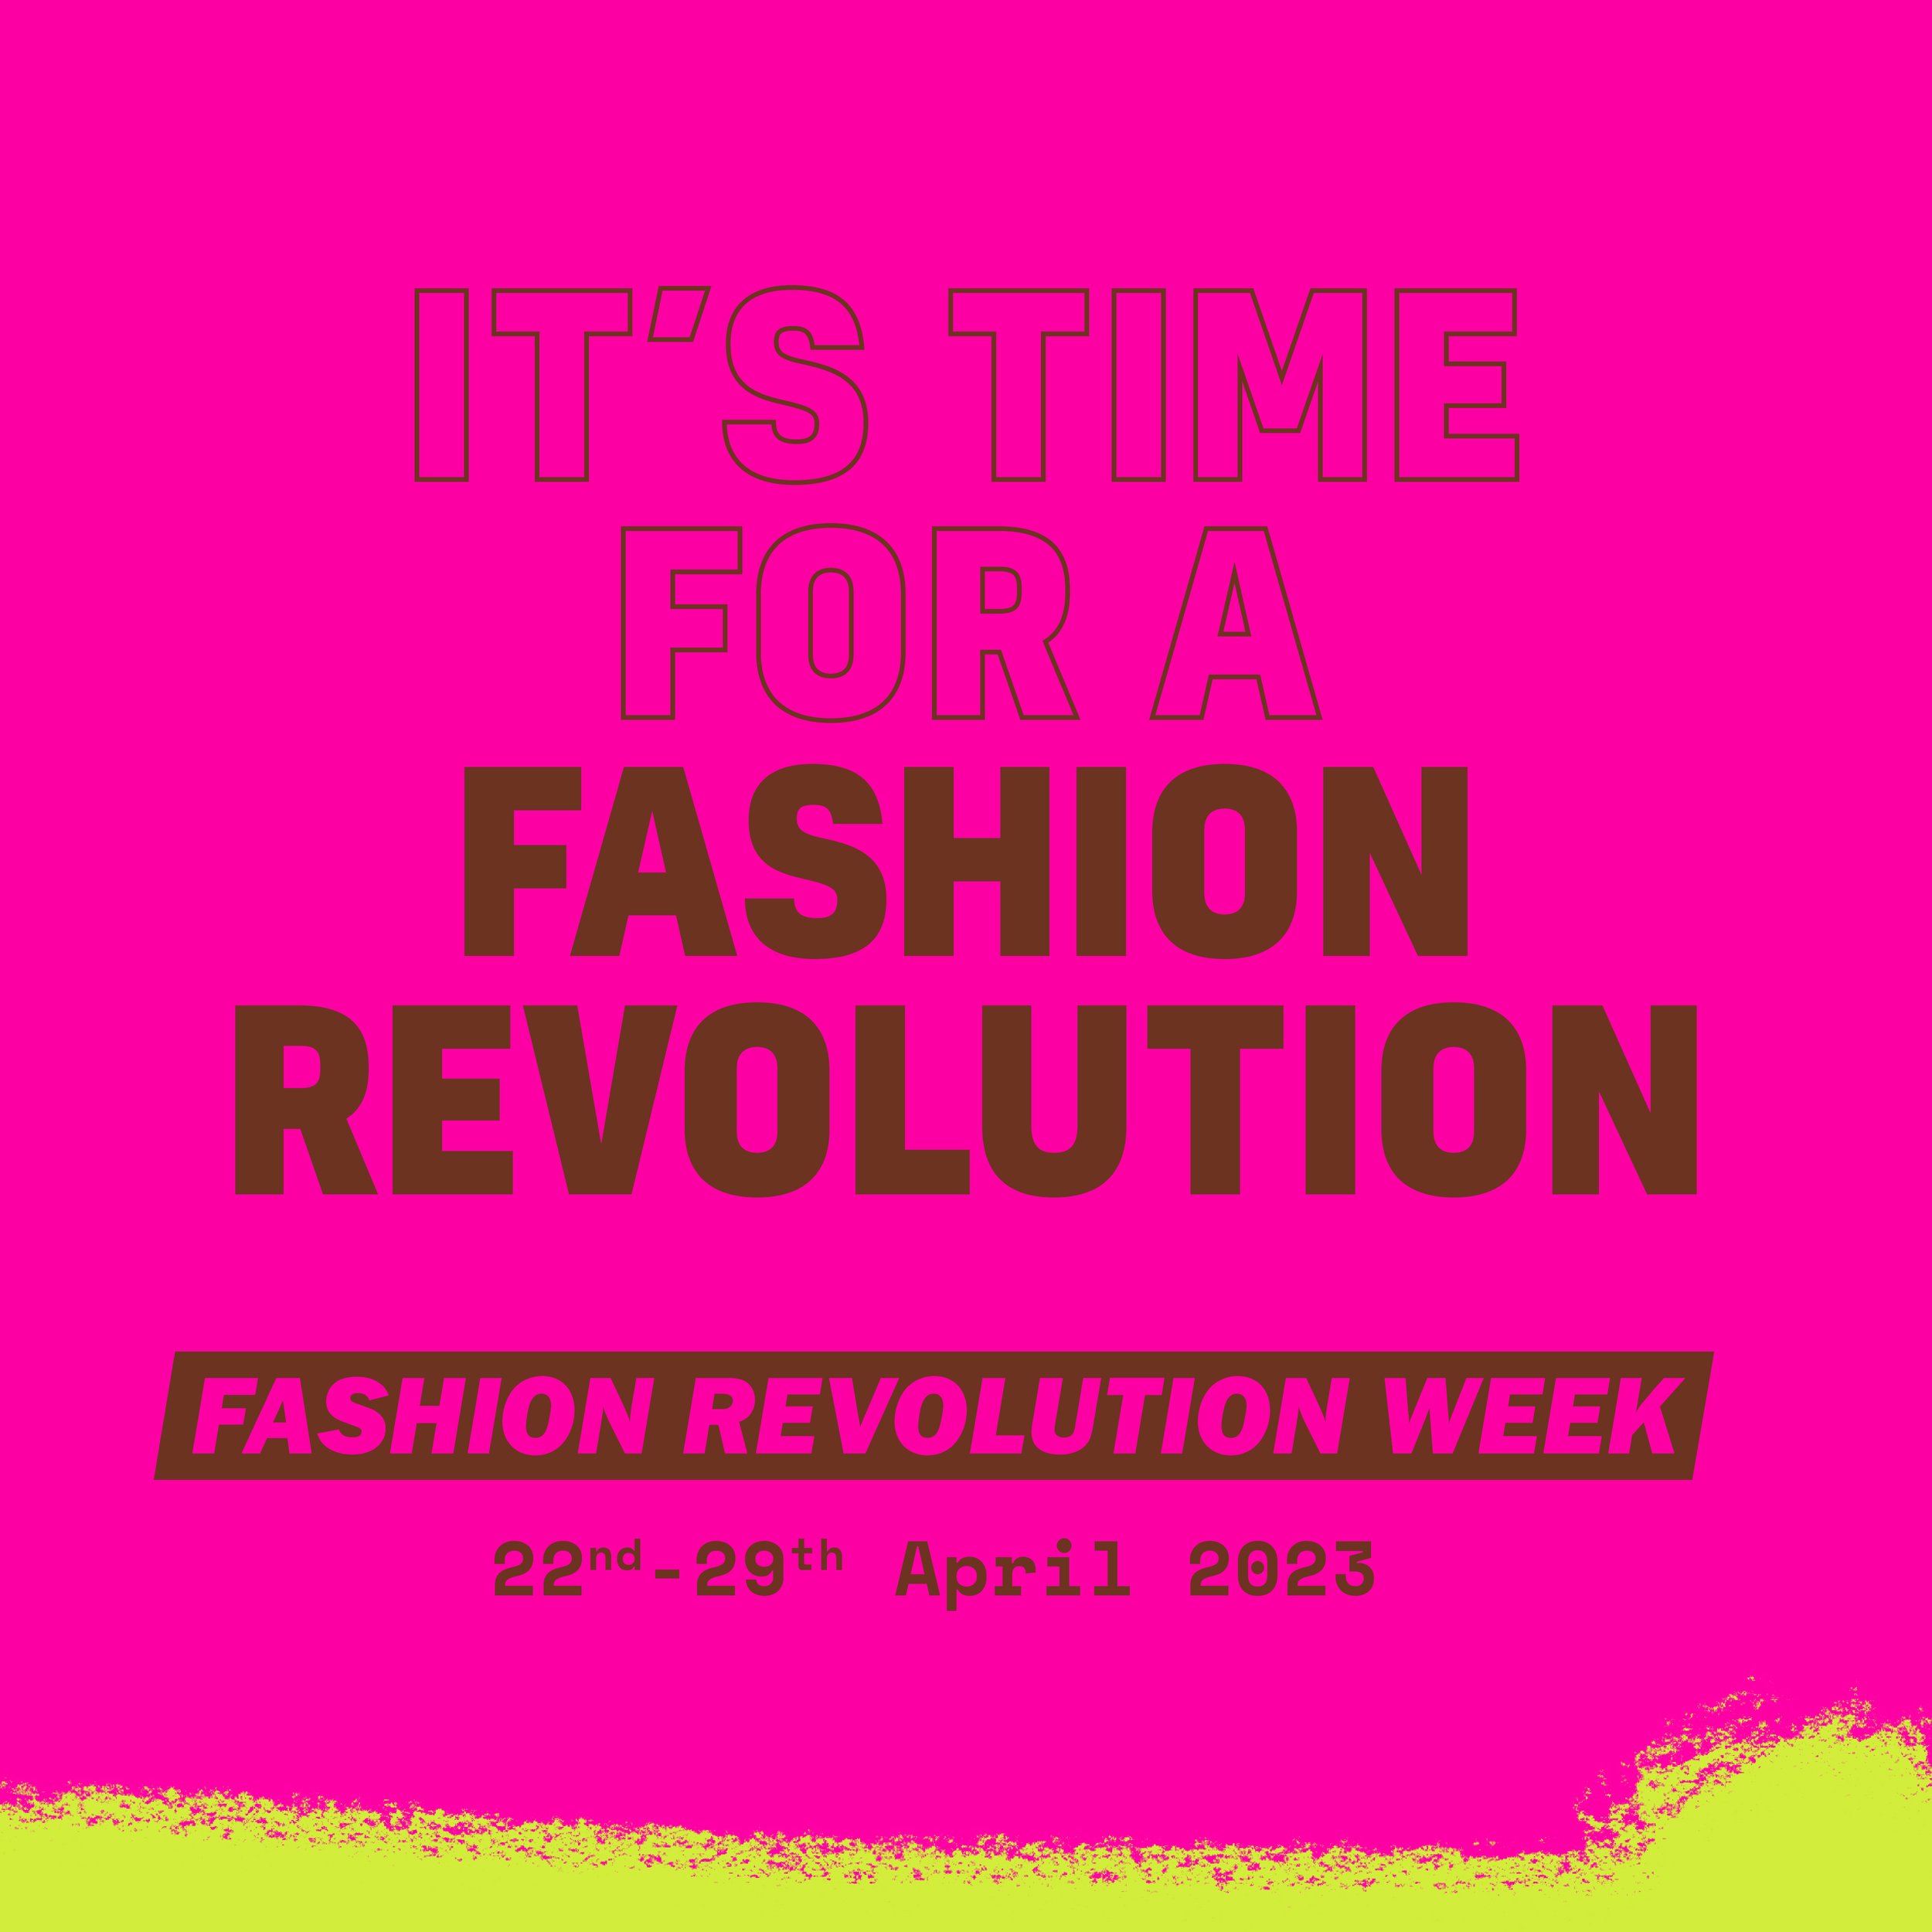 Fashion Revolution YYC